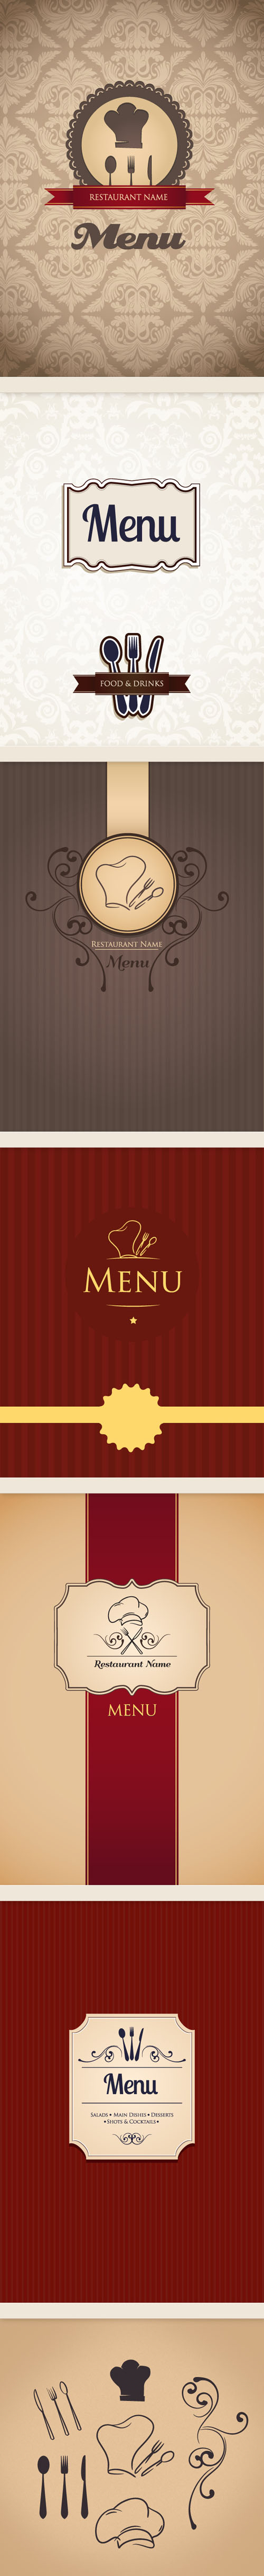 Designtnt - Restaurant Menu Vector Set